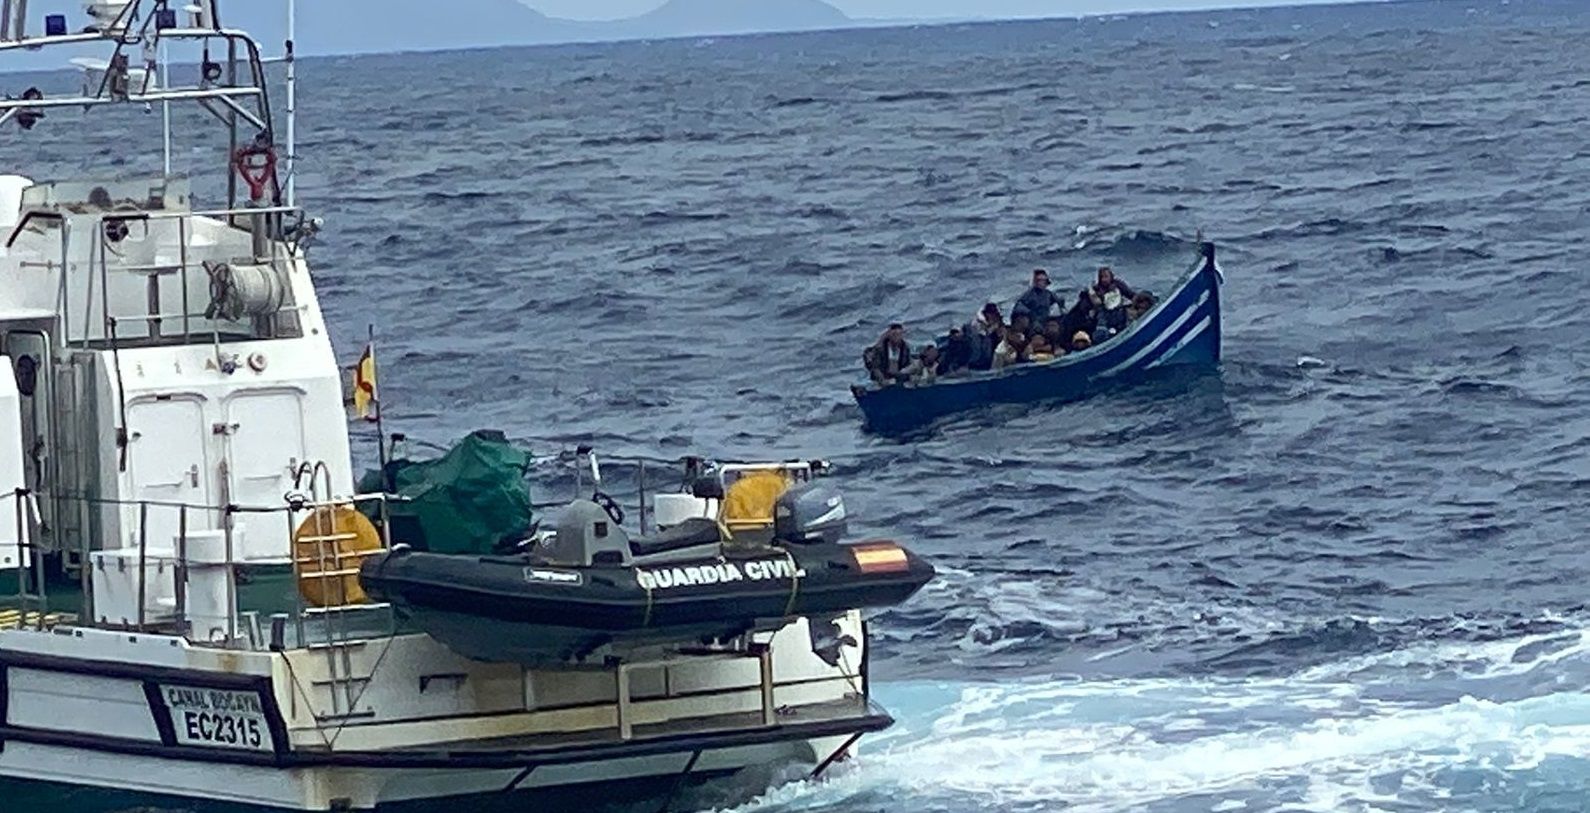 Patera interceptada en el mar por la Guardia Civil